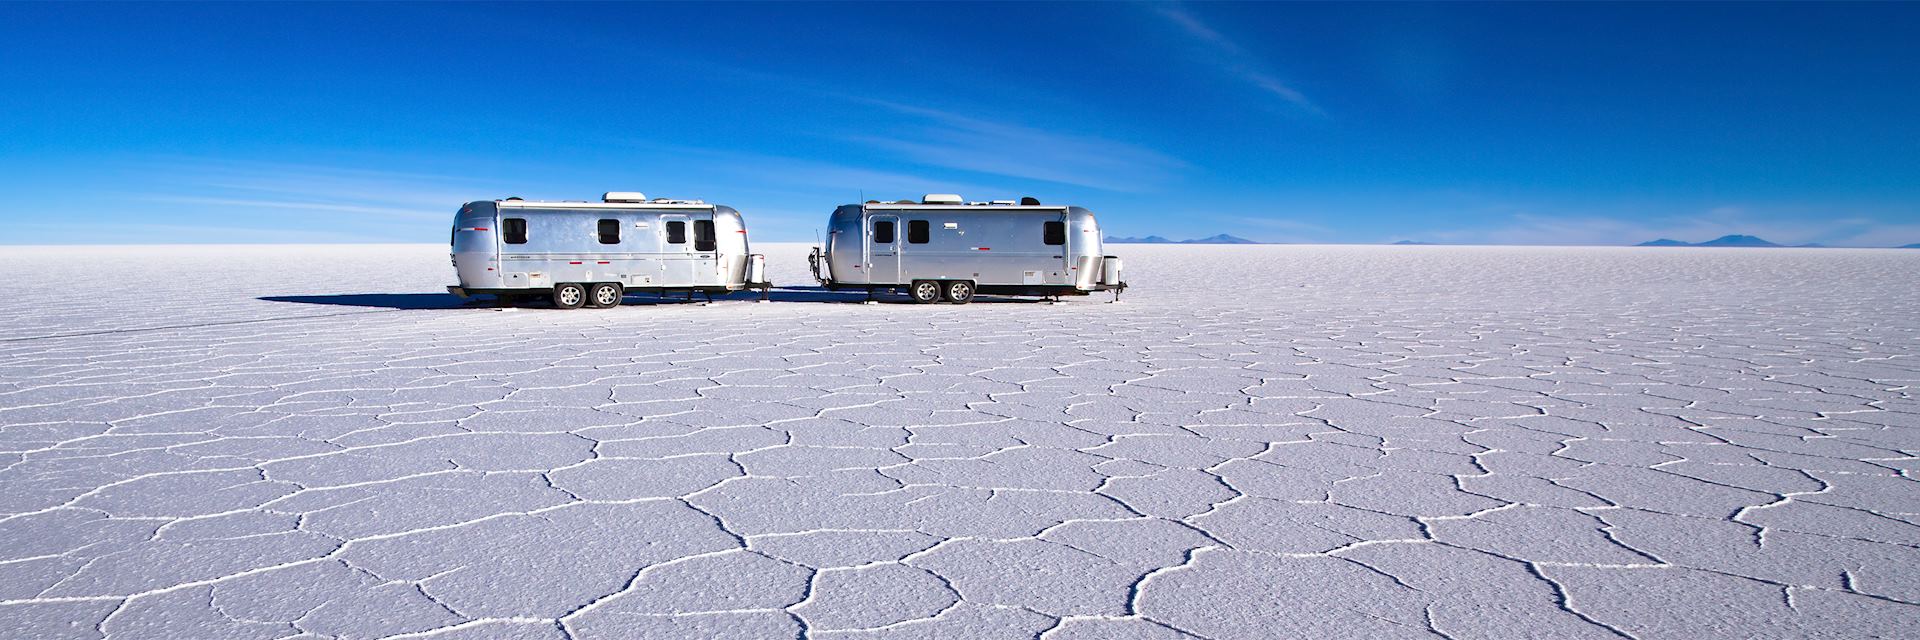 Airstream campers in Salar de Uyuni